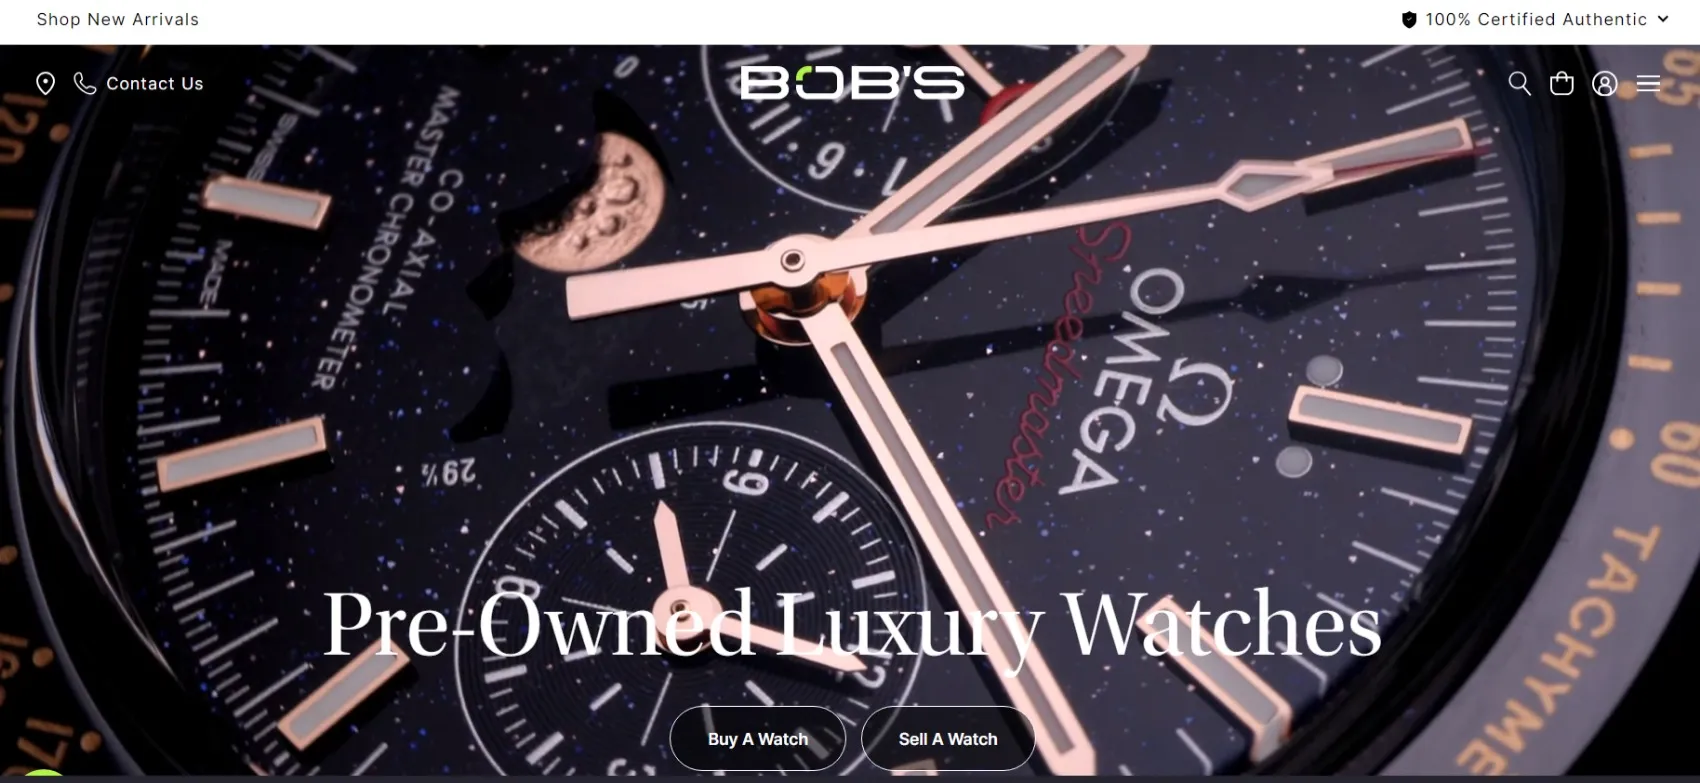 Bob’s Watches